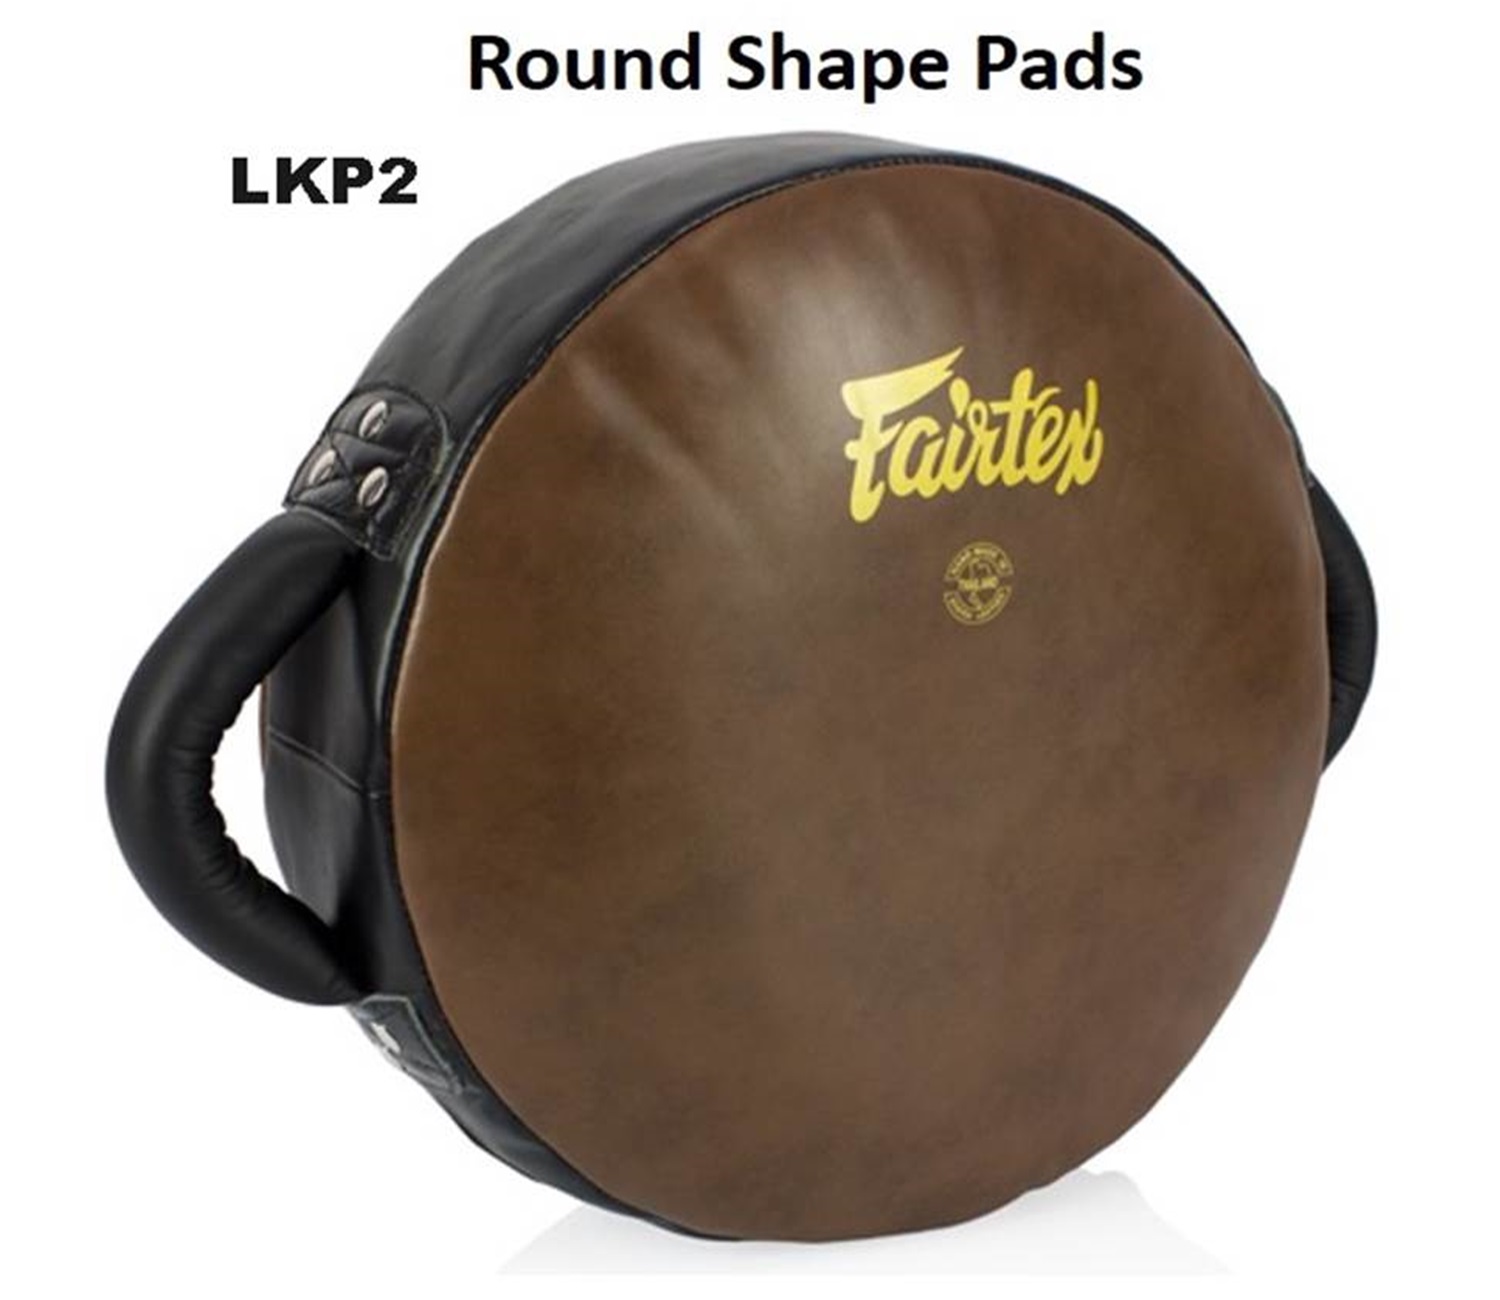 Fairtex Leg kick Pads  LKP2 Brown Donut round  Shape pads  for Training Muay Thai MMA K1 เป้ามือแฟร์เเท็กซ์ แบบกลม สีน้ำตาล สำหรับเทรนเนอร์ ในการฝึกซ้อมนักมวย